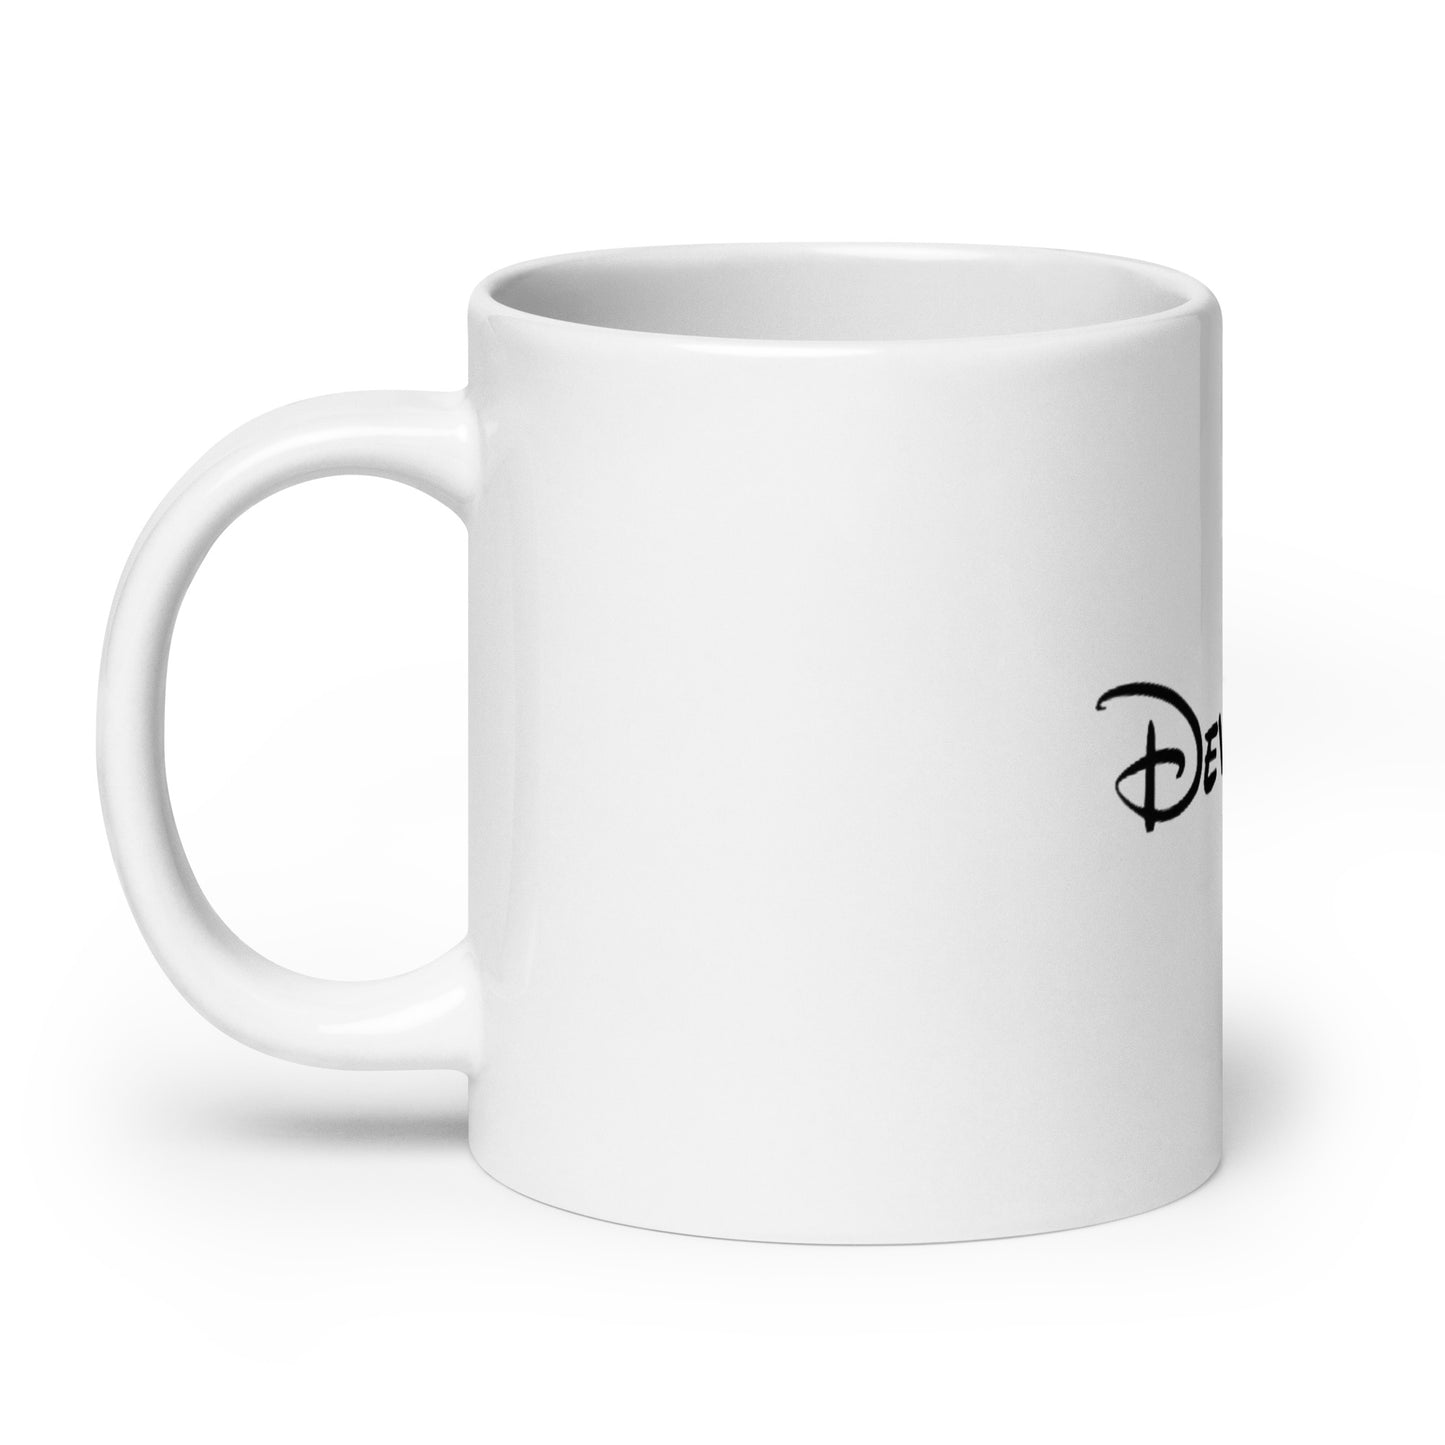 Developer Disney Font mug